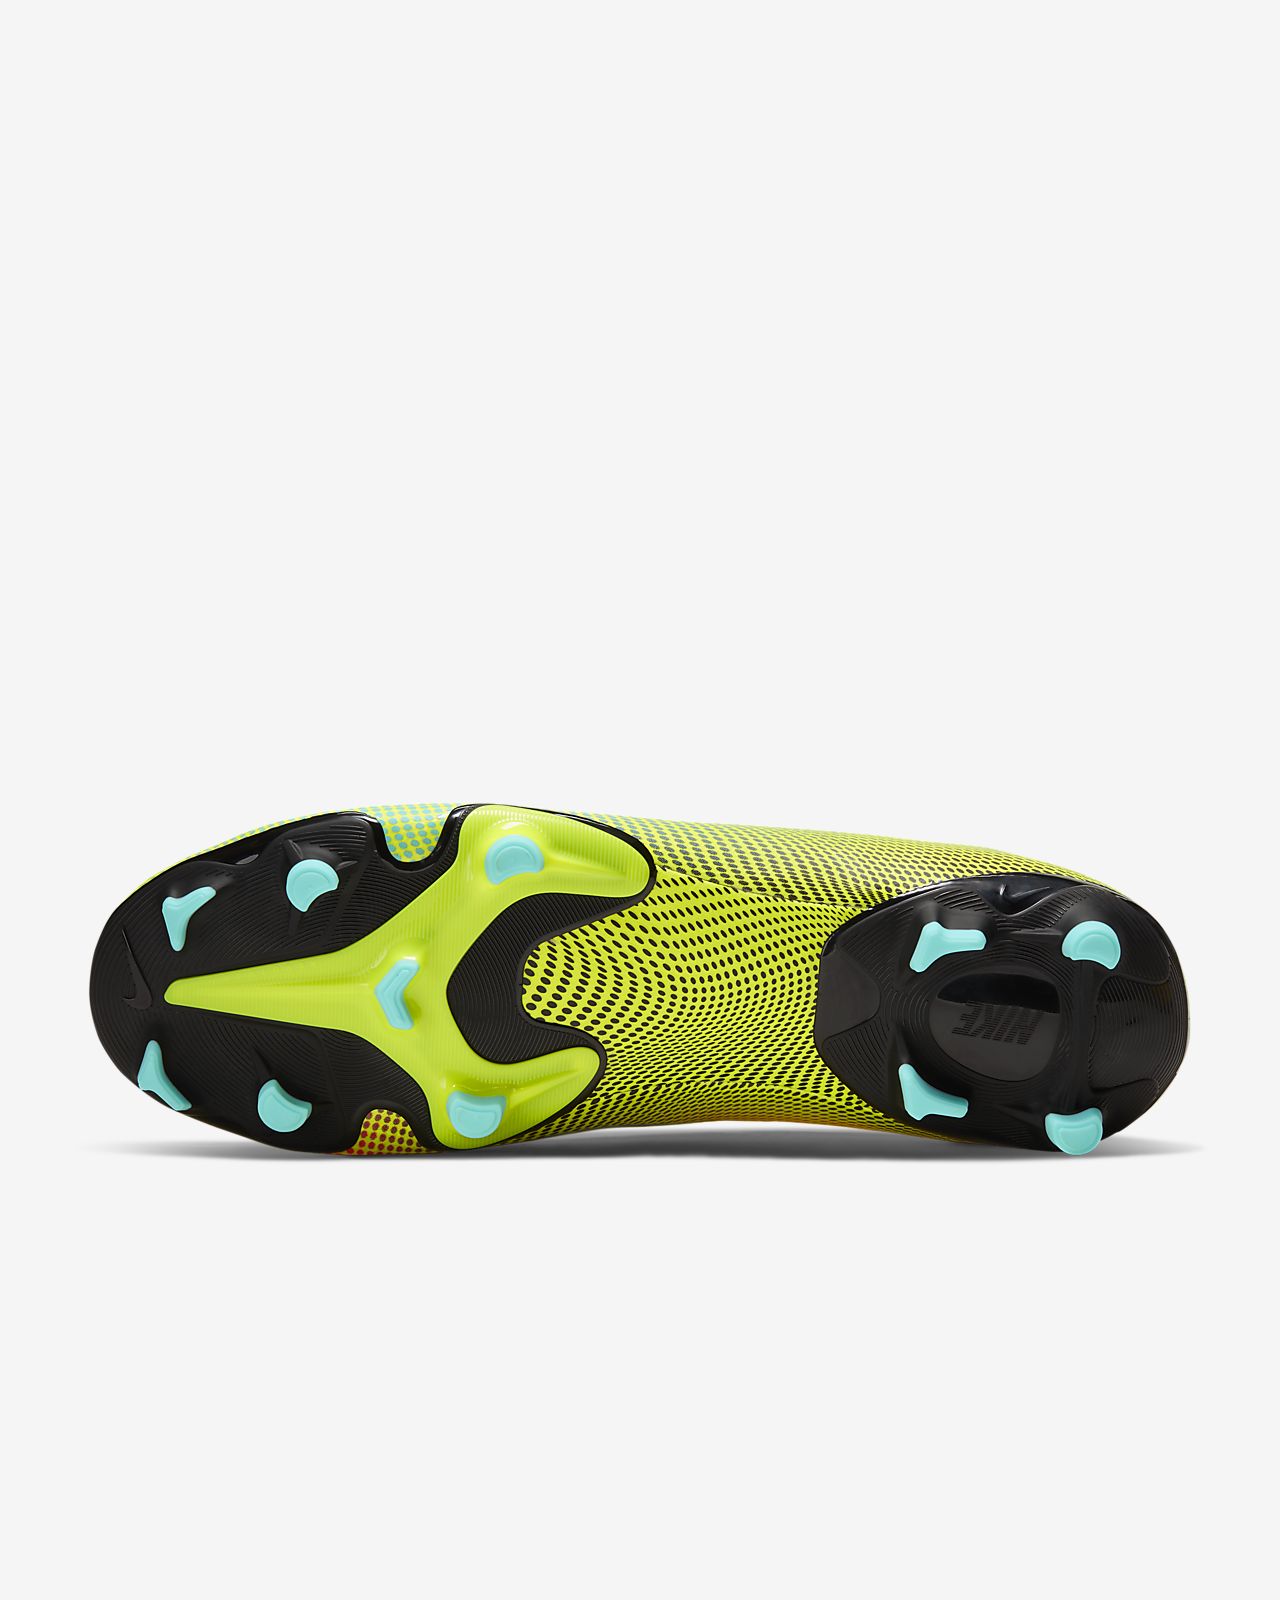 Scarpe Calcetto Nike Mercurial Vapor 13 Academy TF. EBay